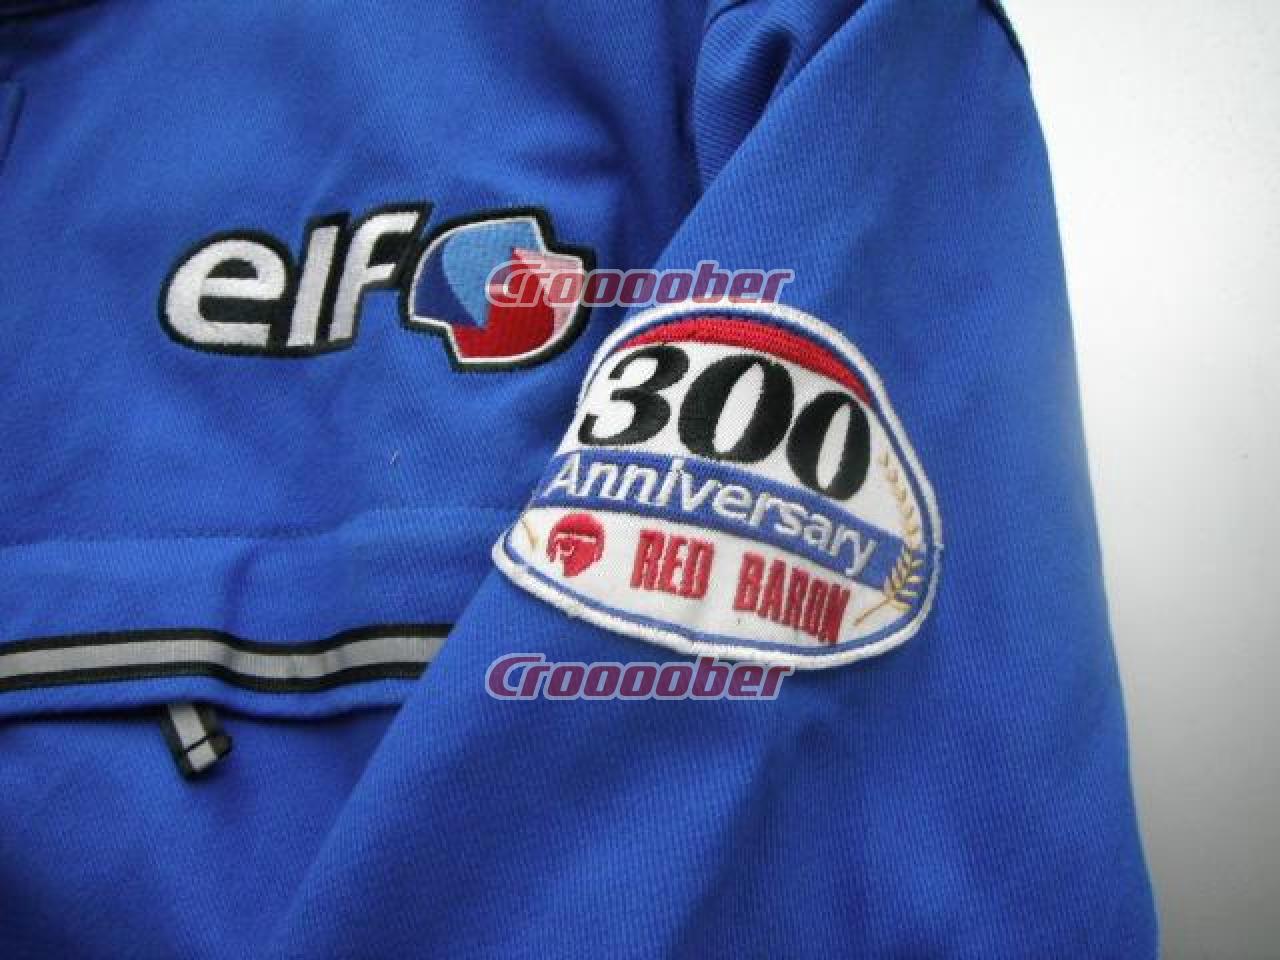 ROM Red Baron Original 300 Store Anniversary Elf Jacket | Jackets 